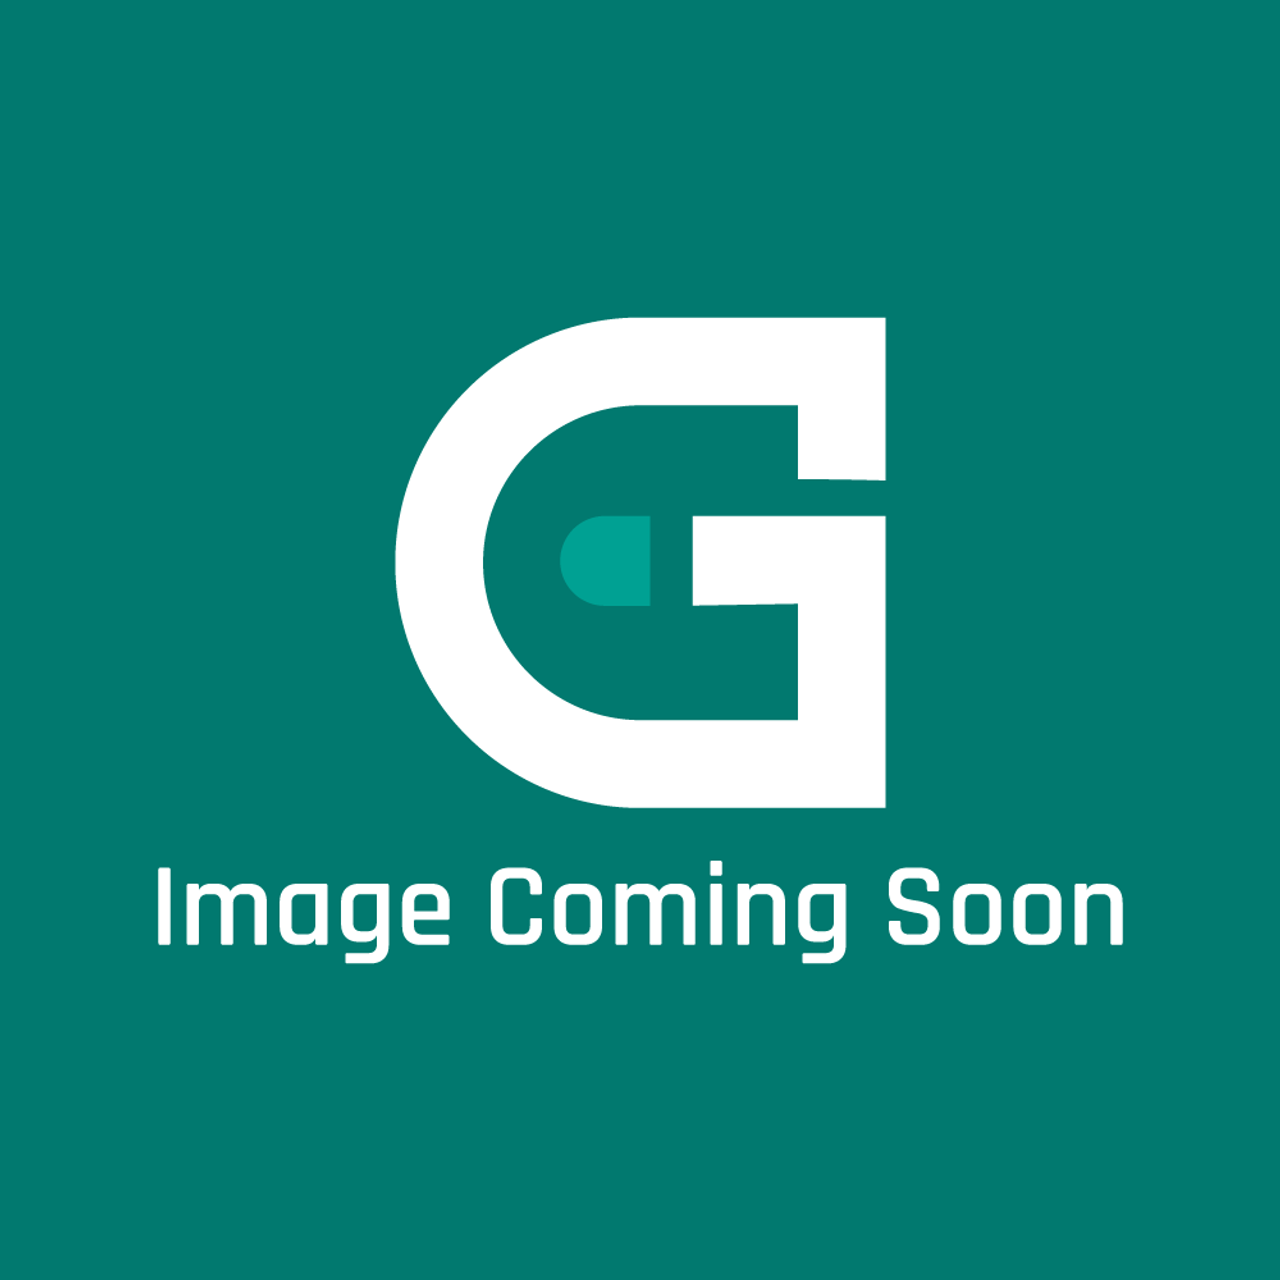 GE Appliances WB63K10156 - Range Back - Image Coming Soon!